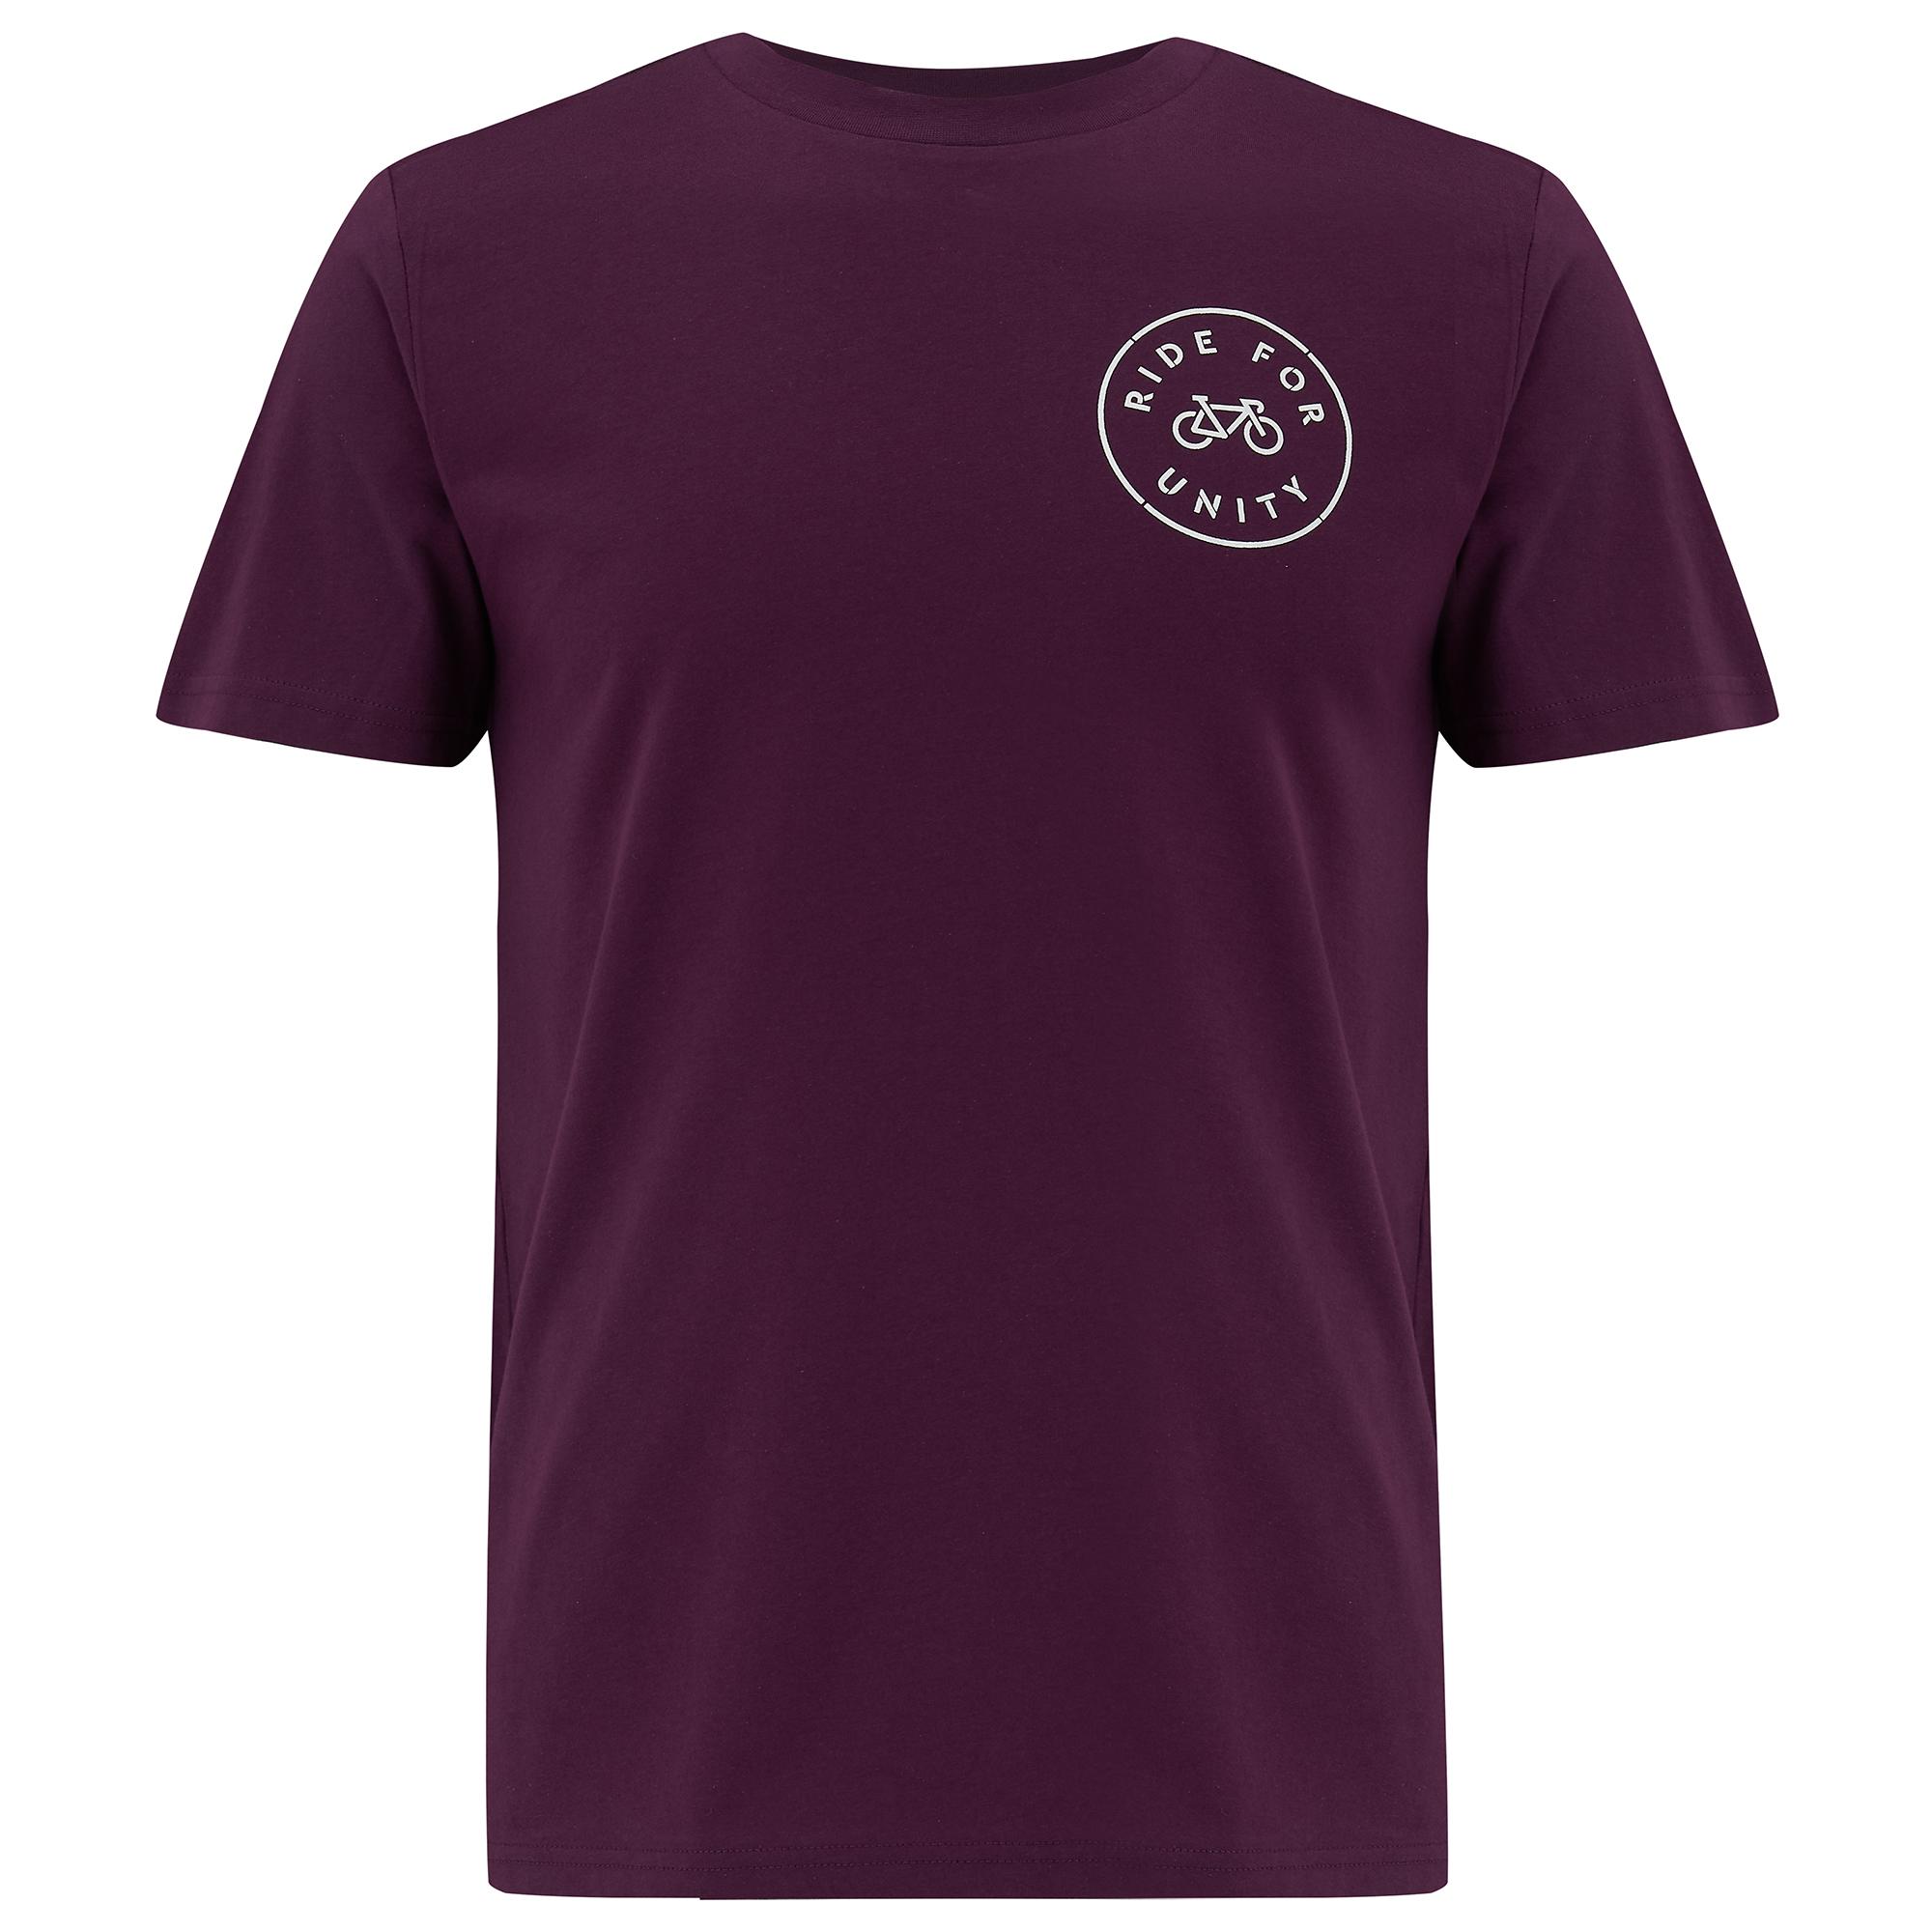 Dhb Ride For Unity T-shirt - Burgundy